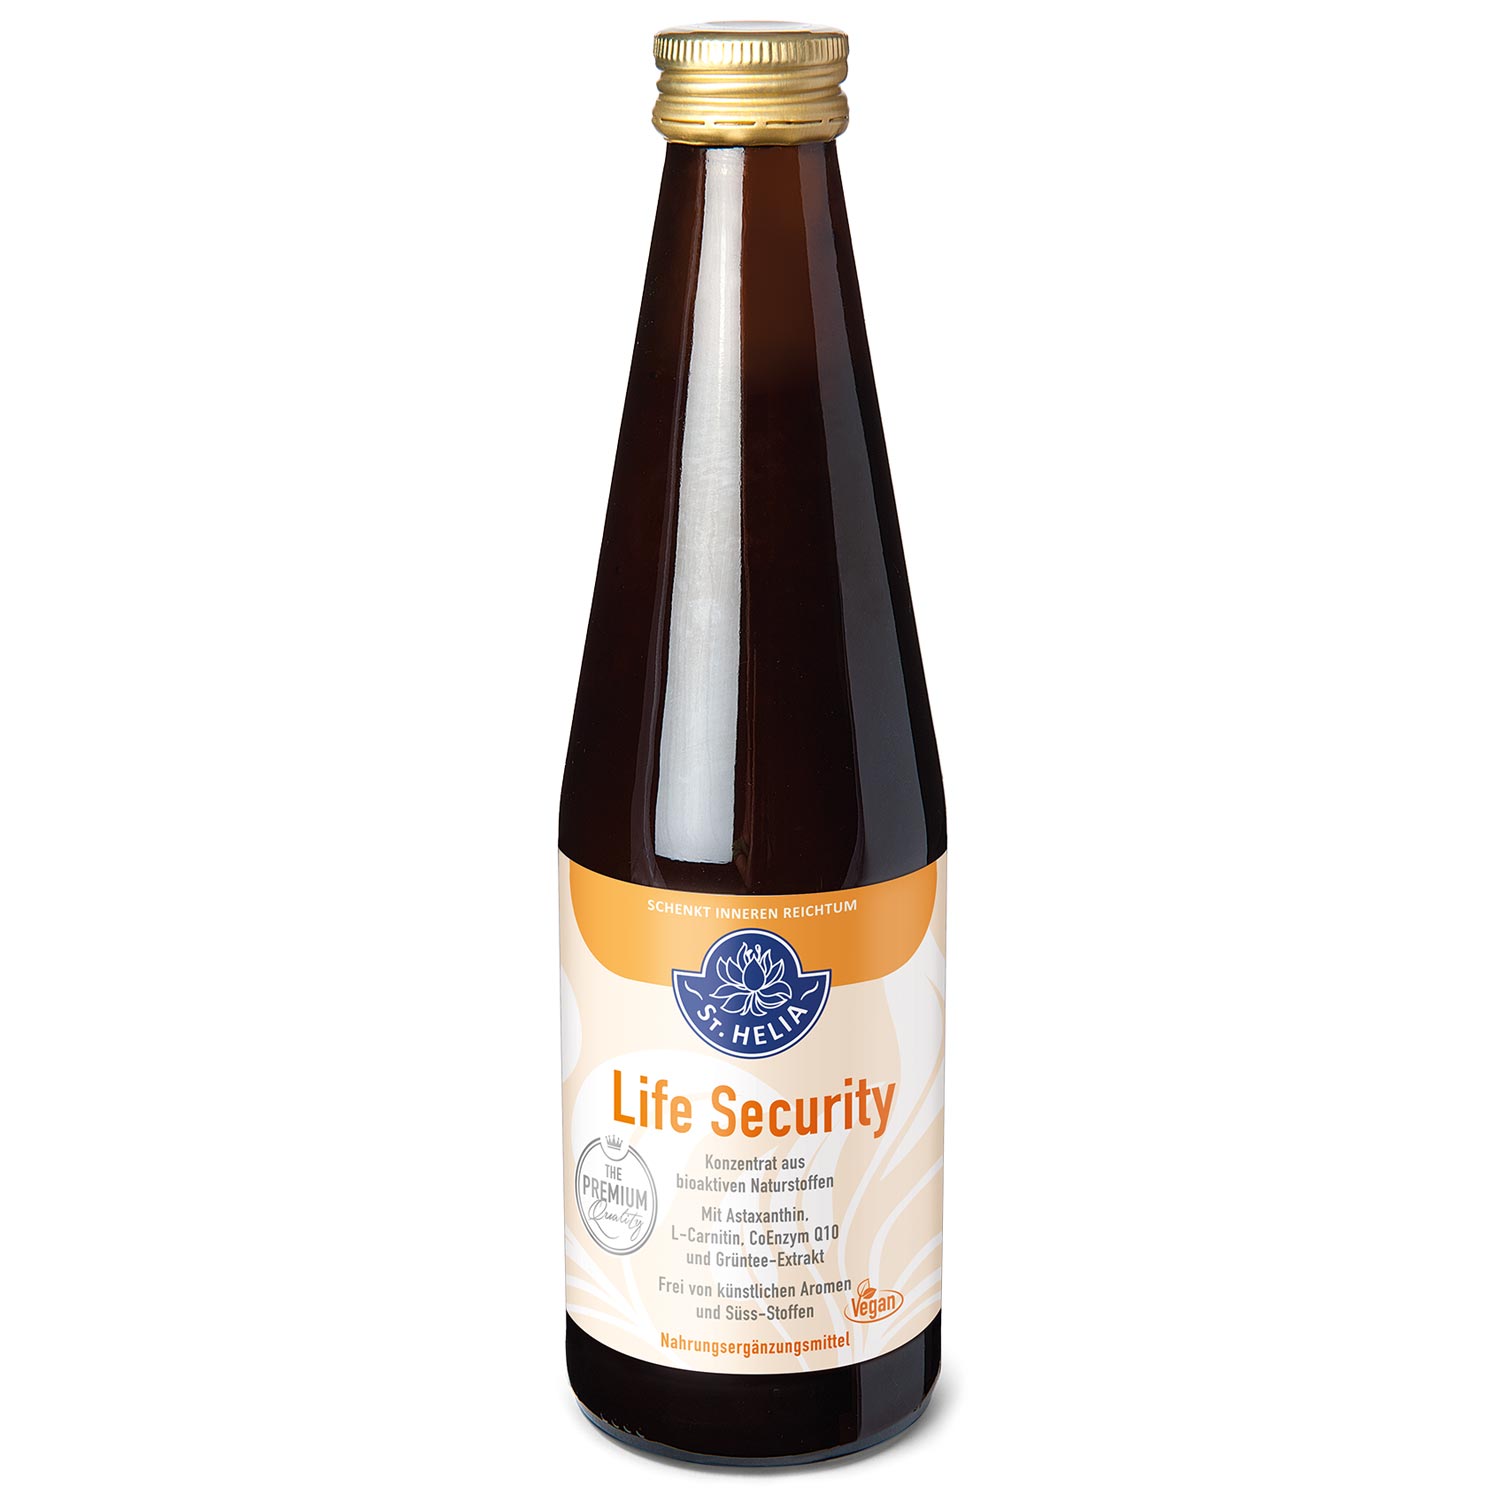 Life Security Premium von St. Helia - 330ml